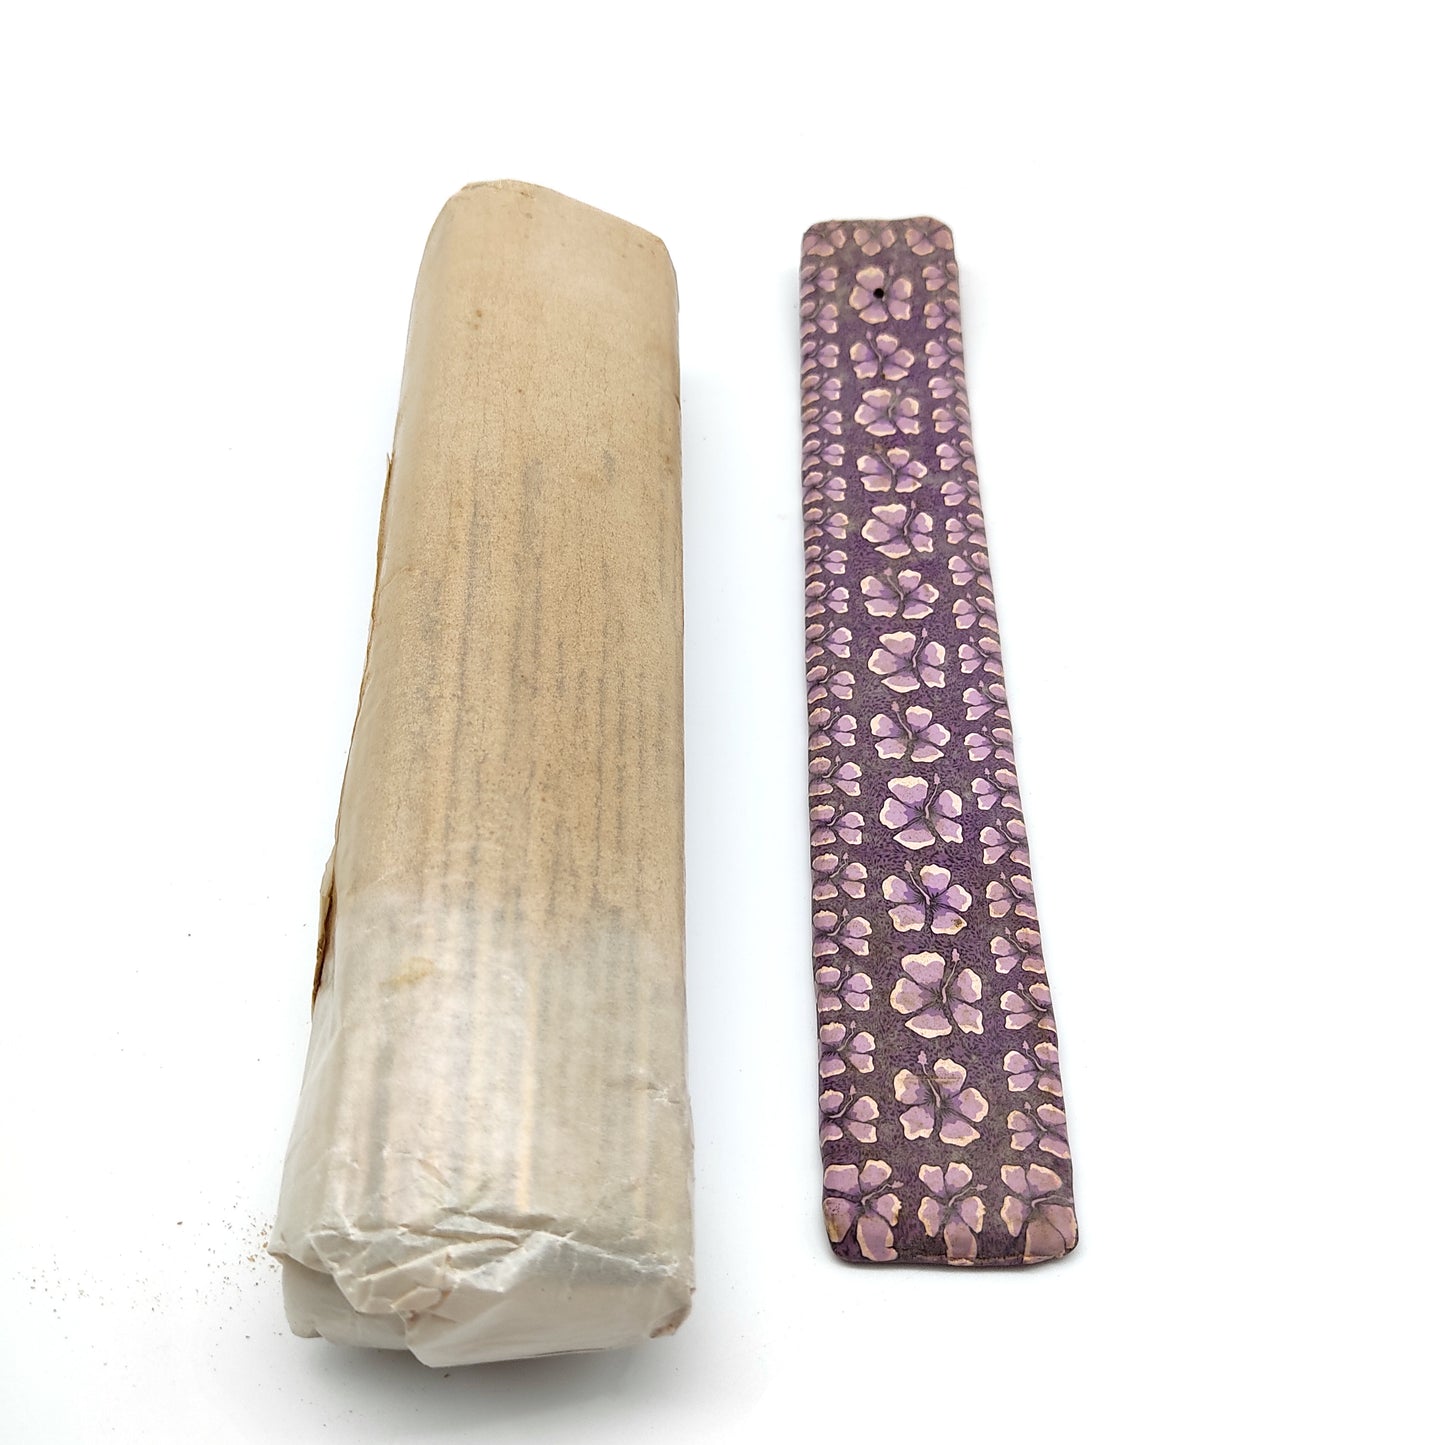 Floral Purple Stick Incense Holder Ash Catcher W/ 9 oz. Lovely Raw Stick Incense